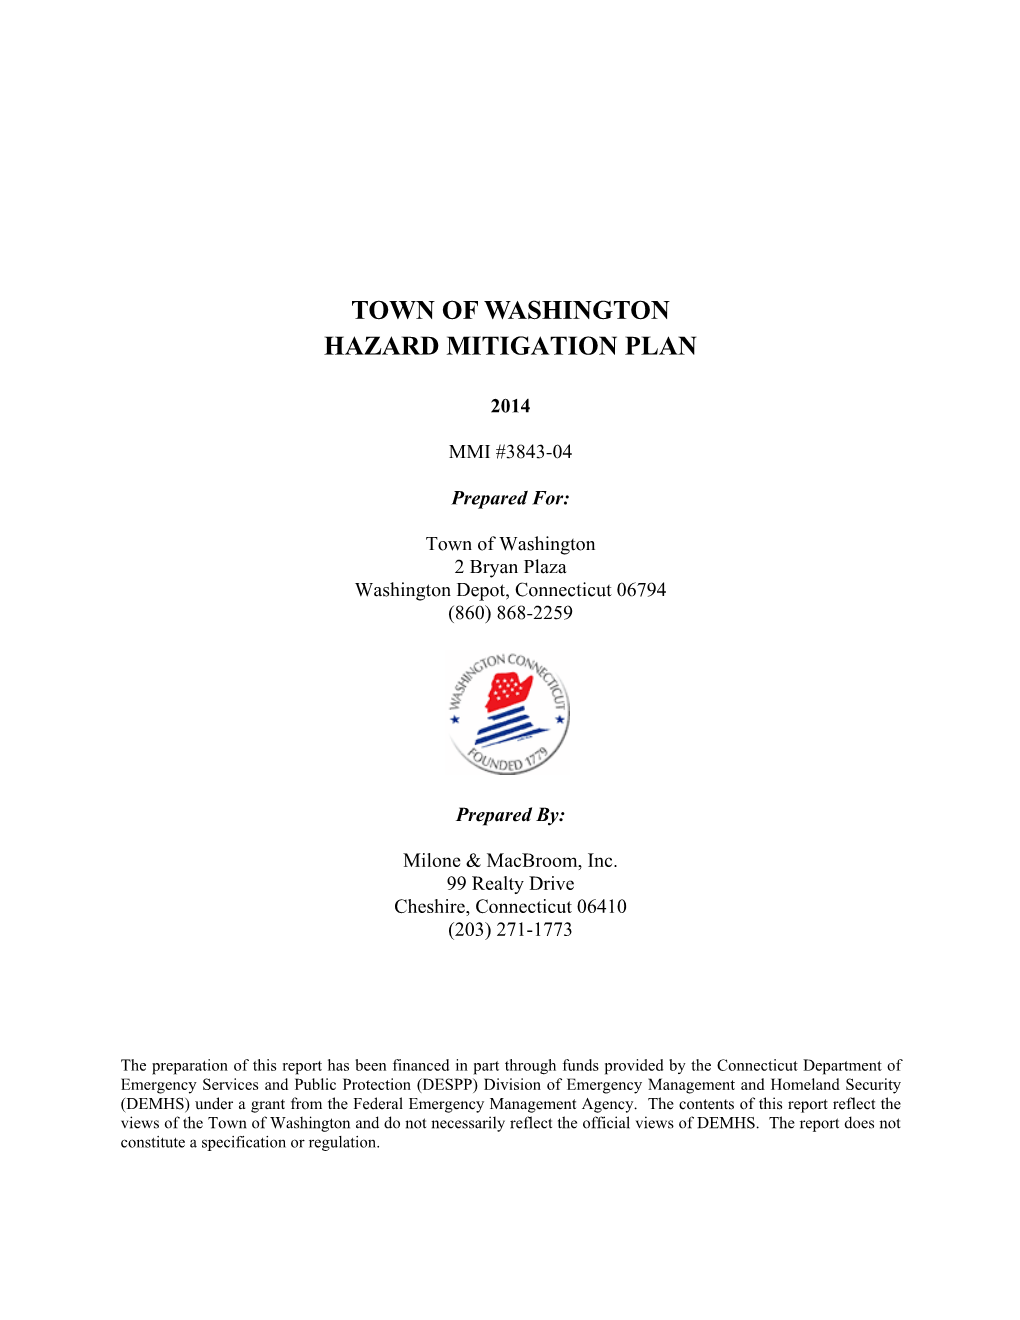 Town of Washington Hazard Mitigation Plan